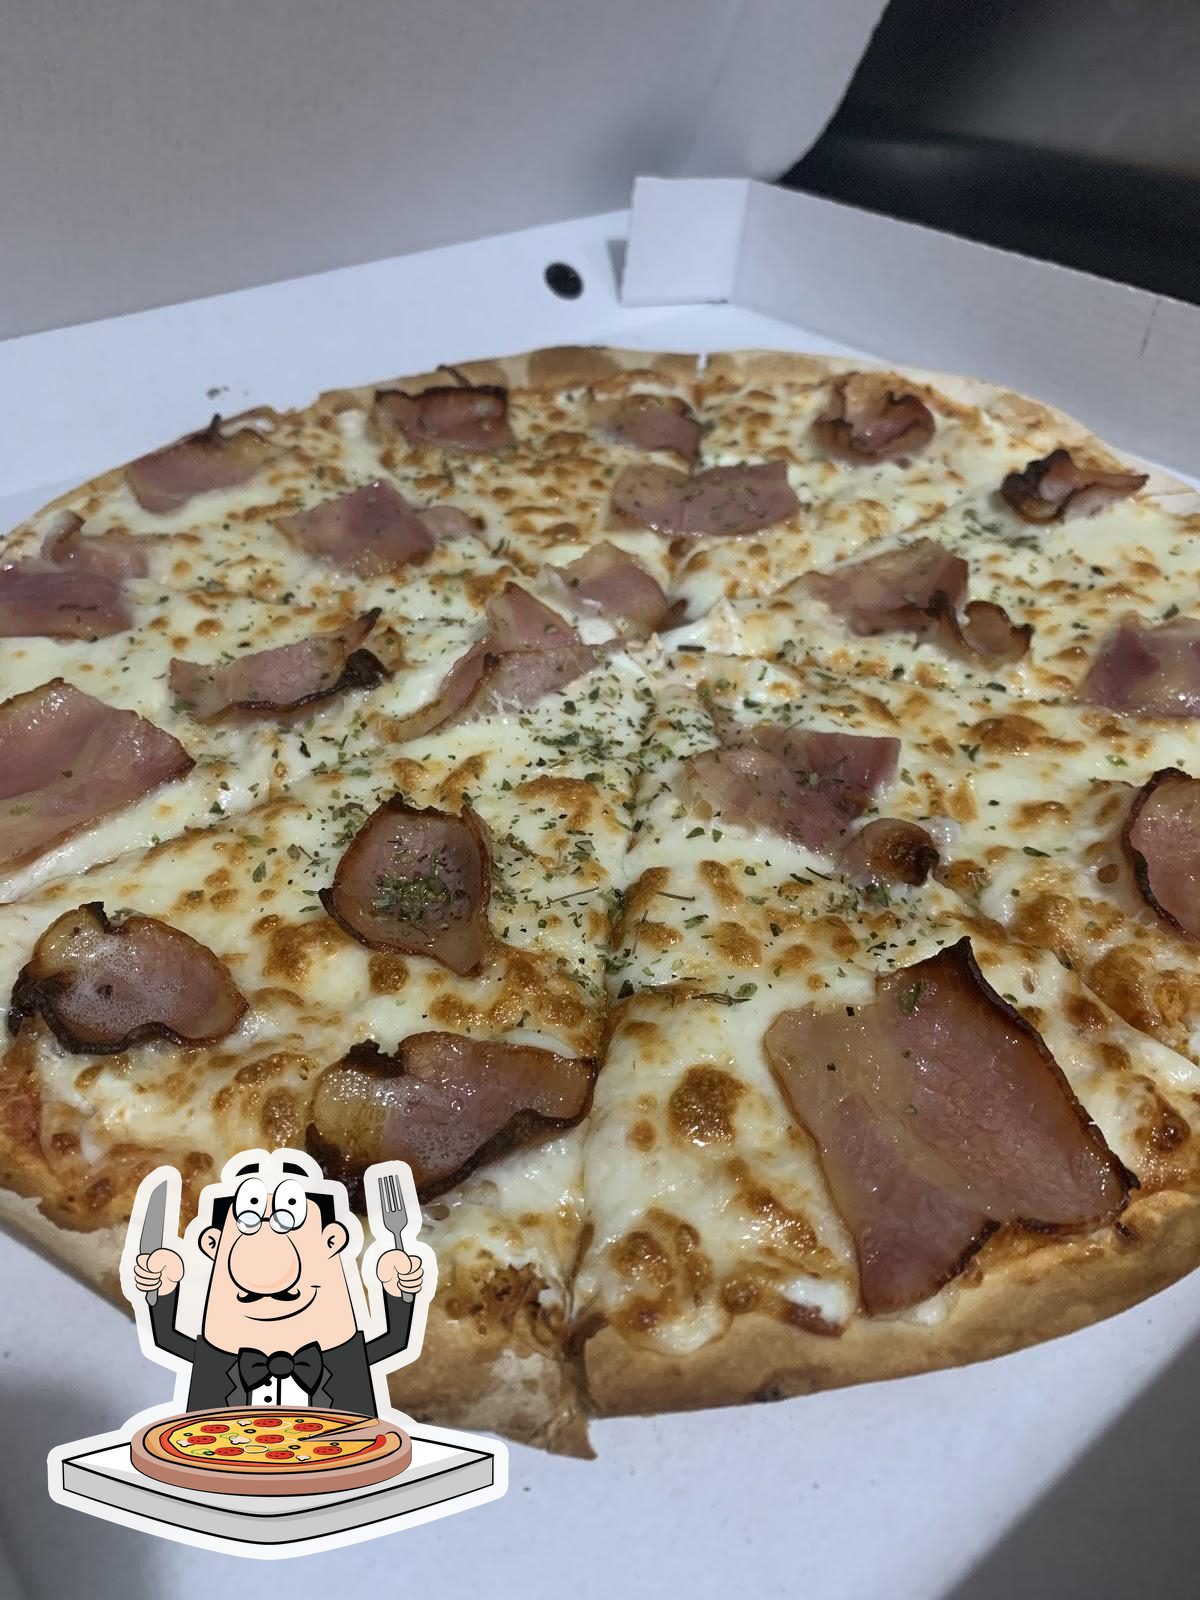 Papa Bruno's Pizza e Hot Dog Sintra – Guia Comercial Portugal